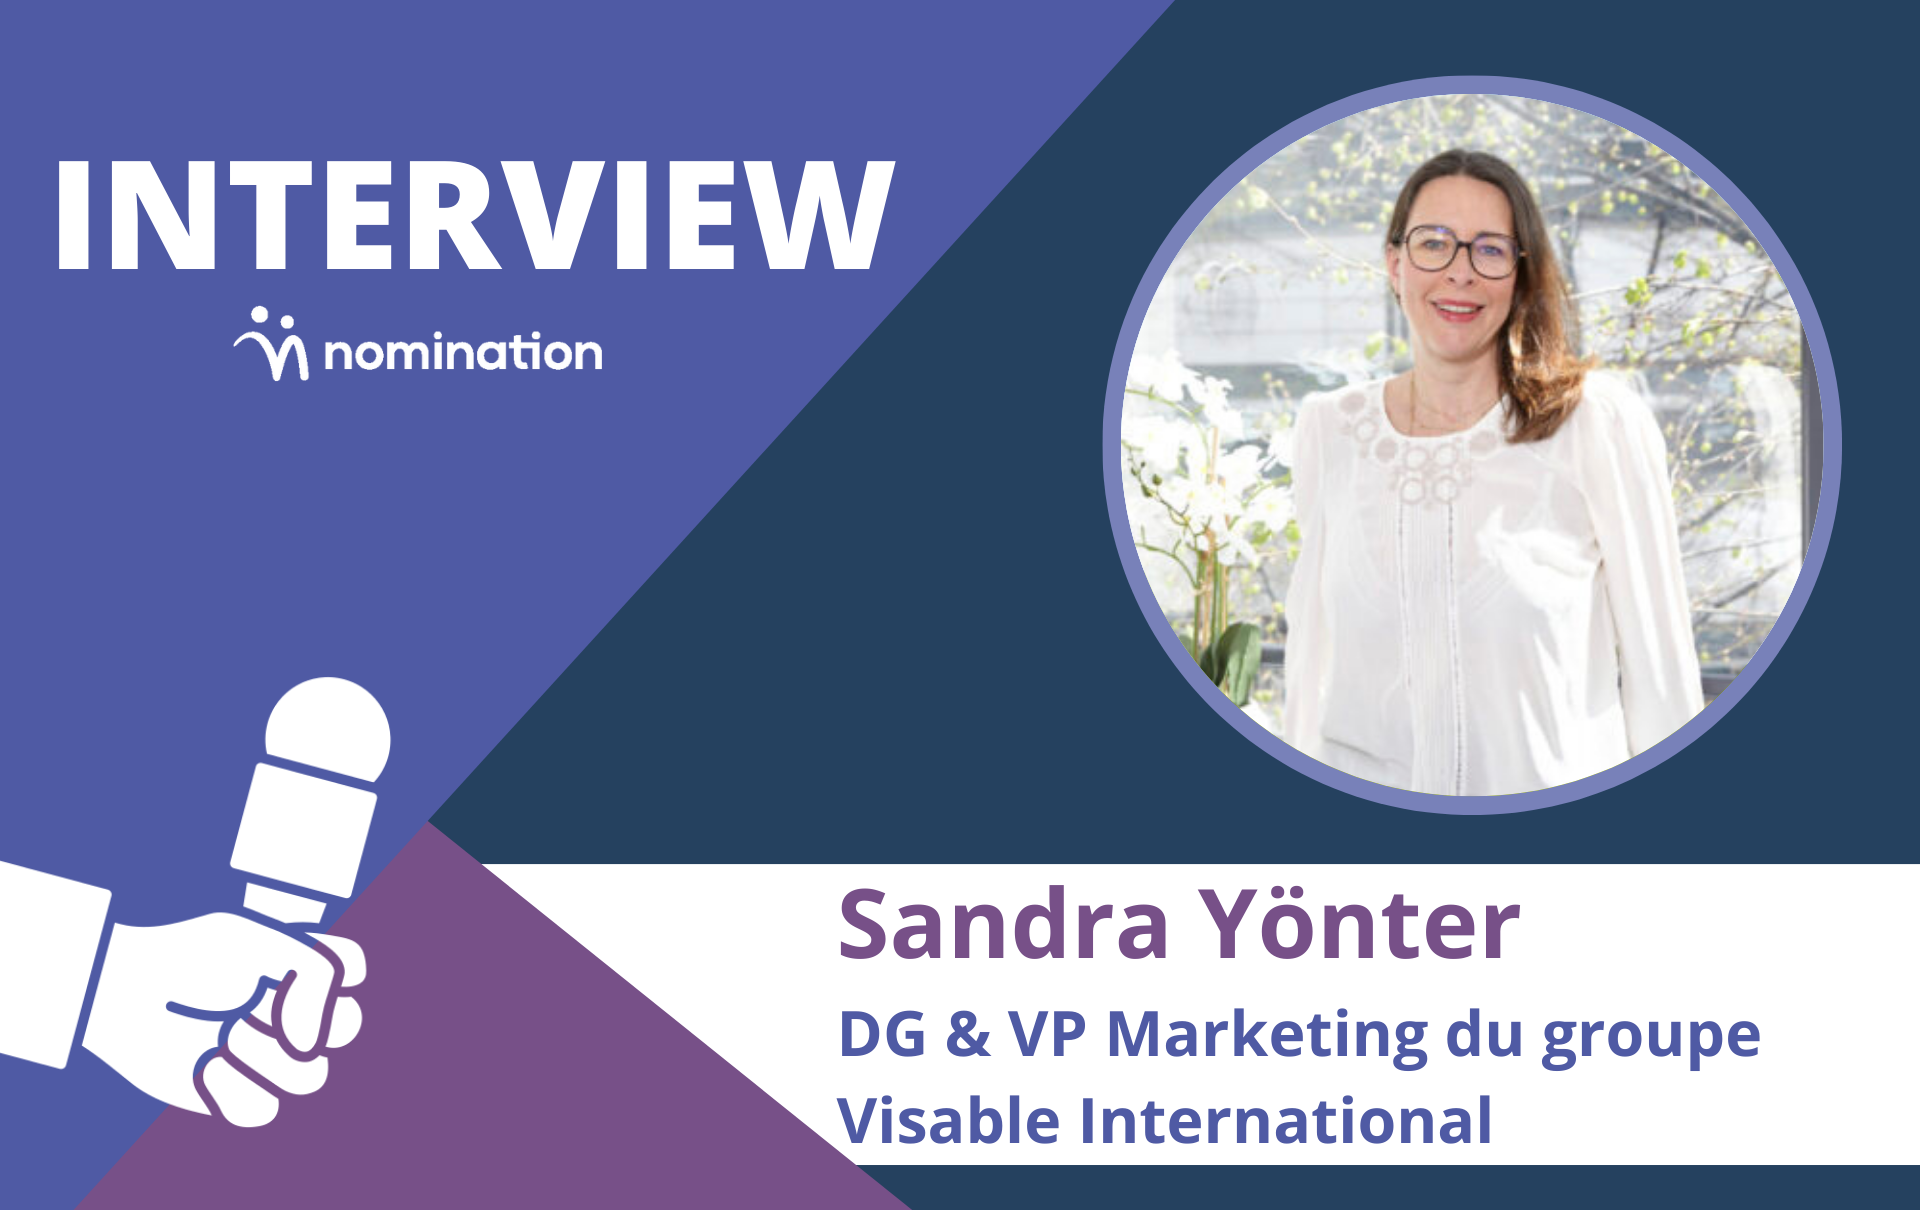 Sandra Yönter, DG de Visable International & VP Marketing du groupe